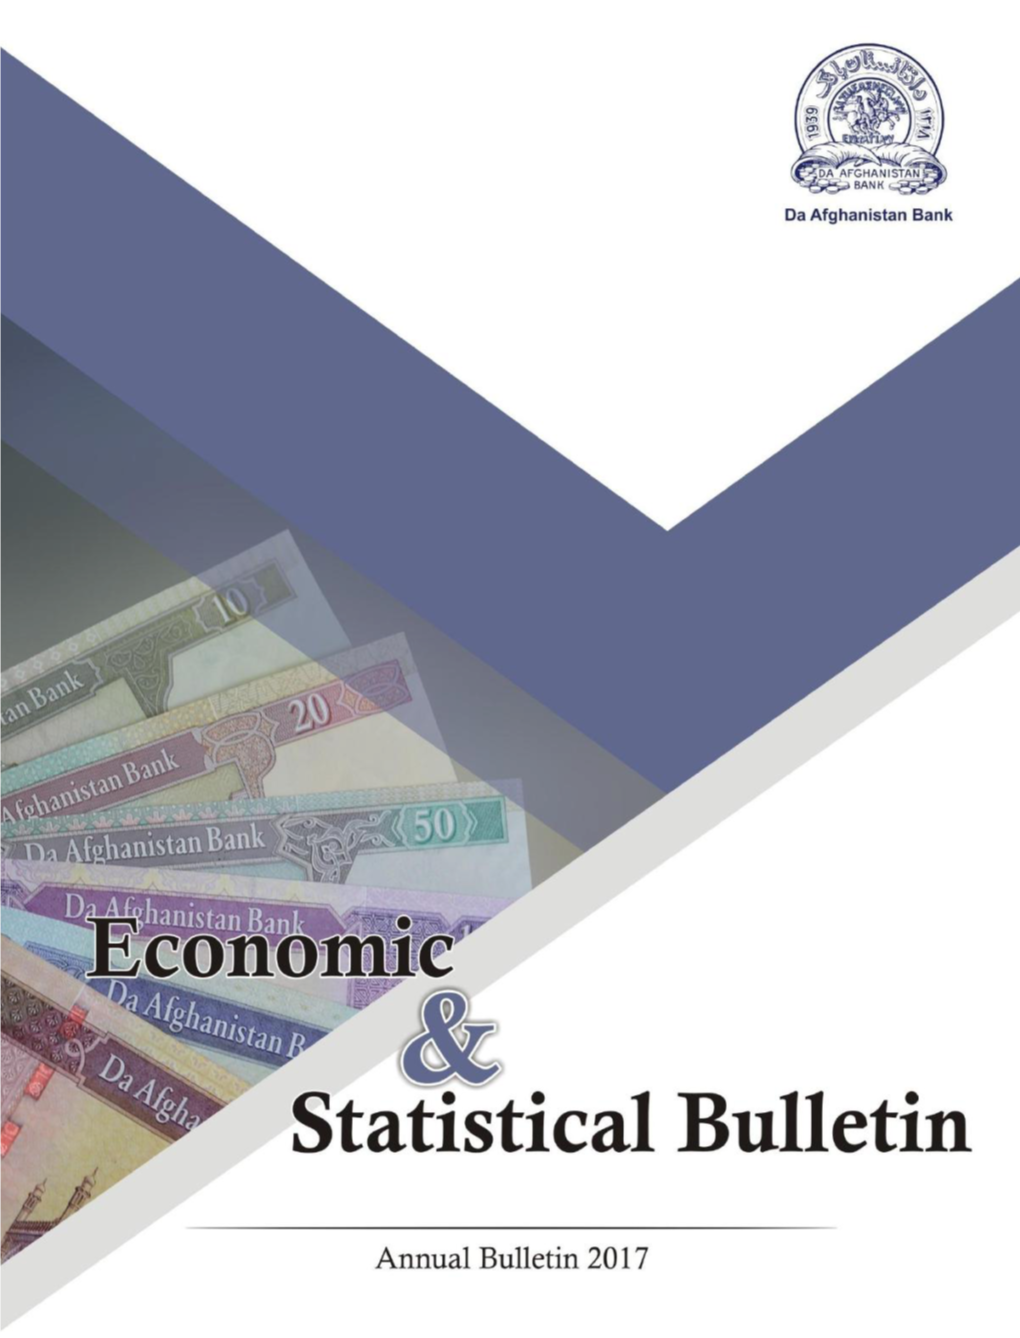 Da Afghanistan Bank Economic and Statistical Bulletin